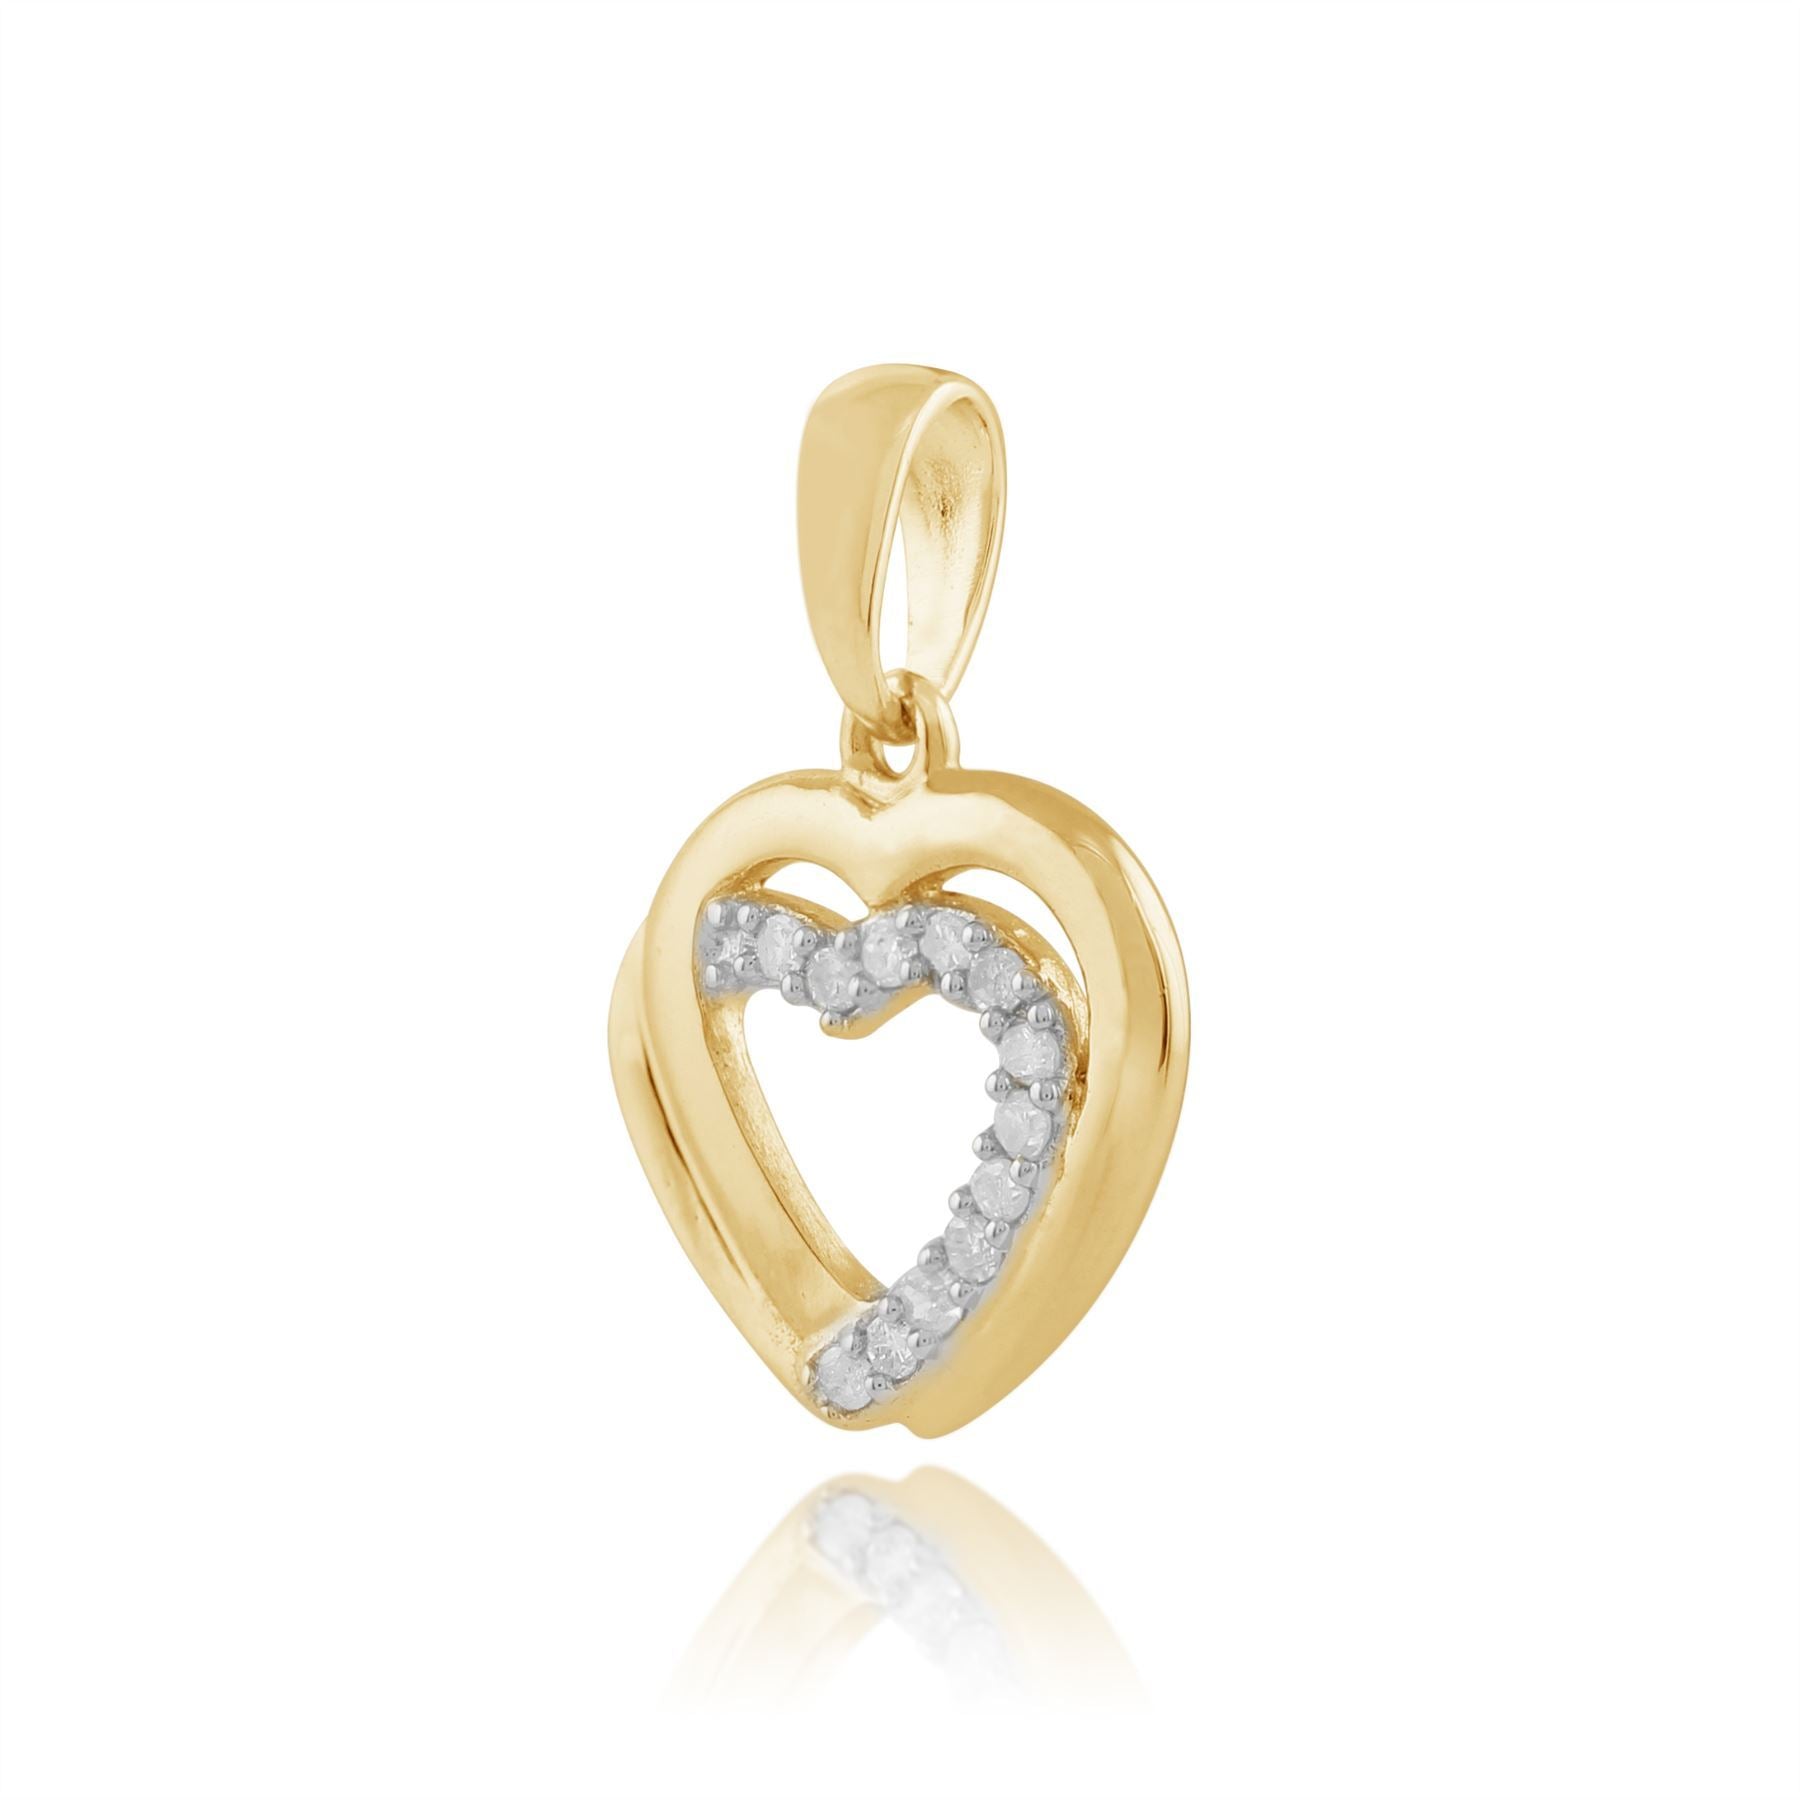 Gemondo 9ct Yellow Gold 0.06ct Diamond Hearts Pendant on Chain